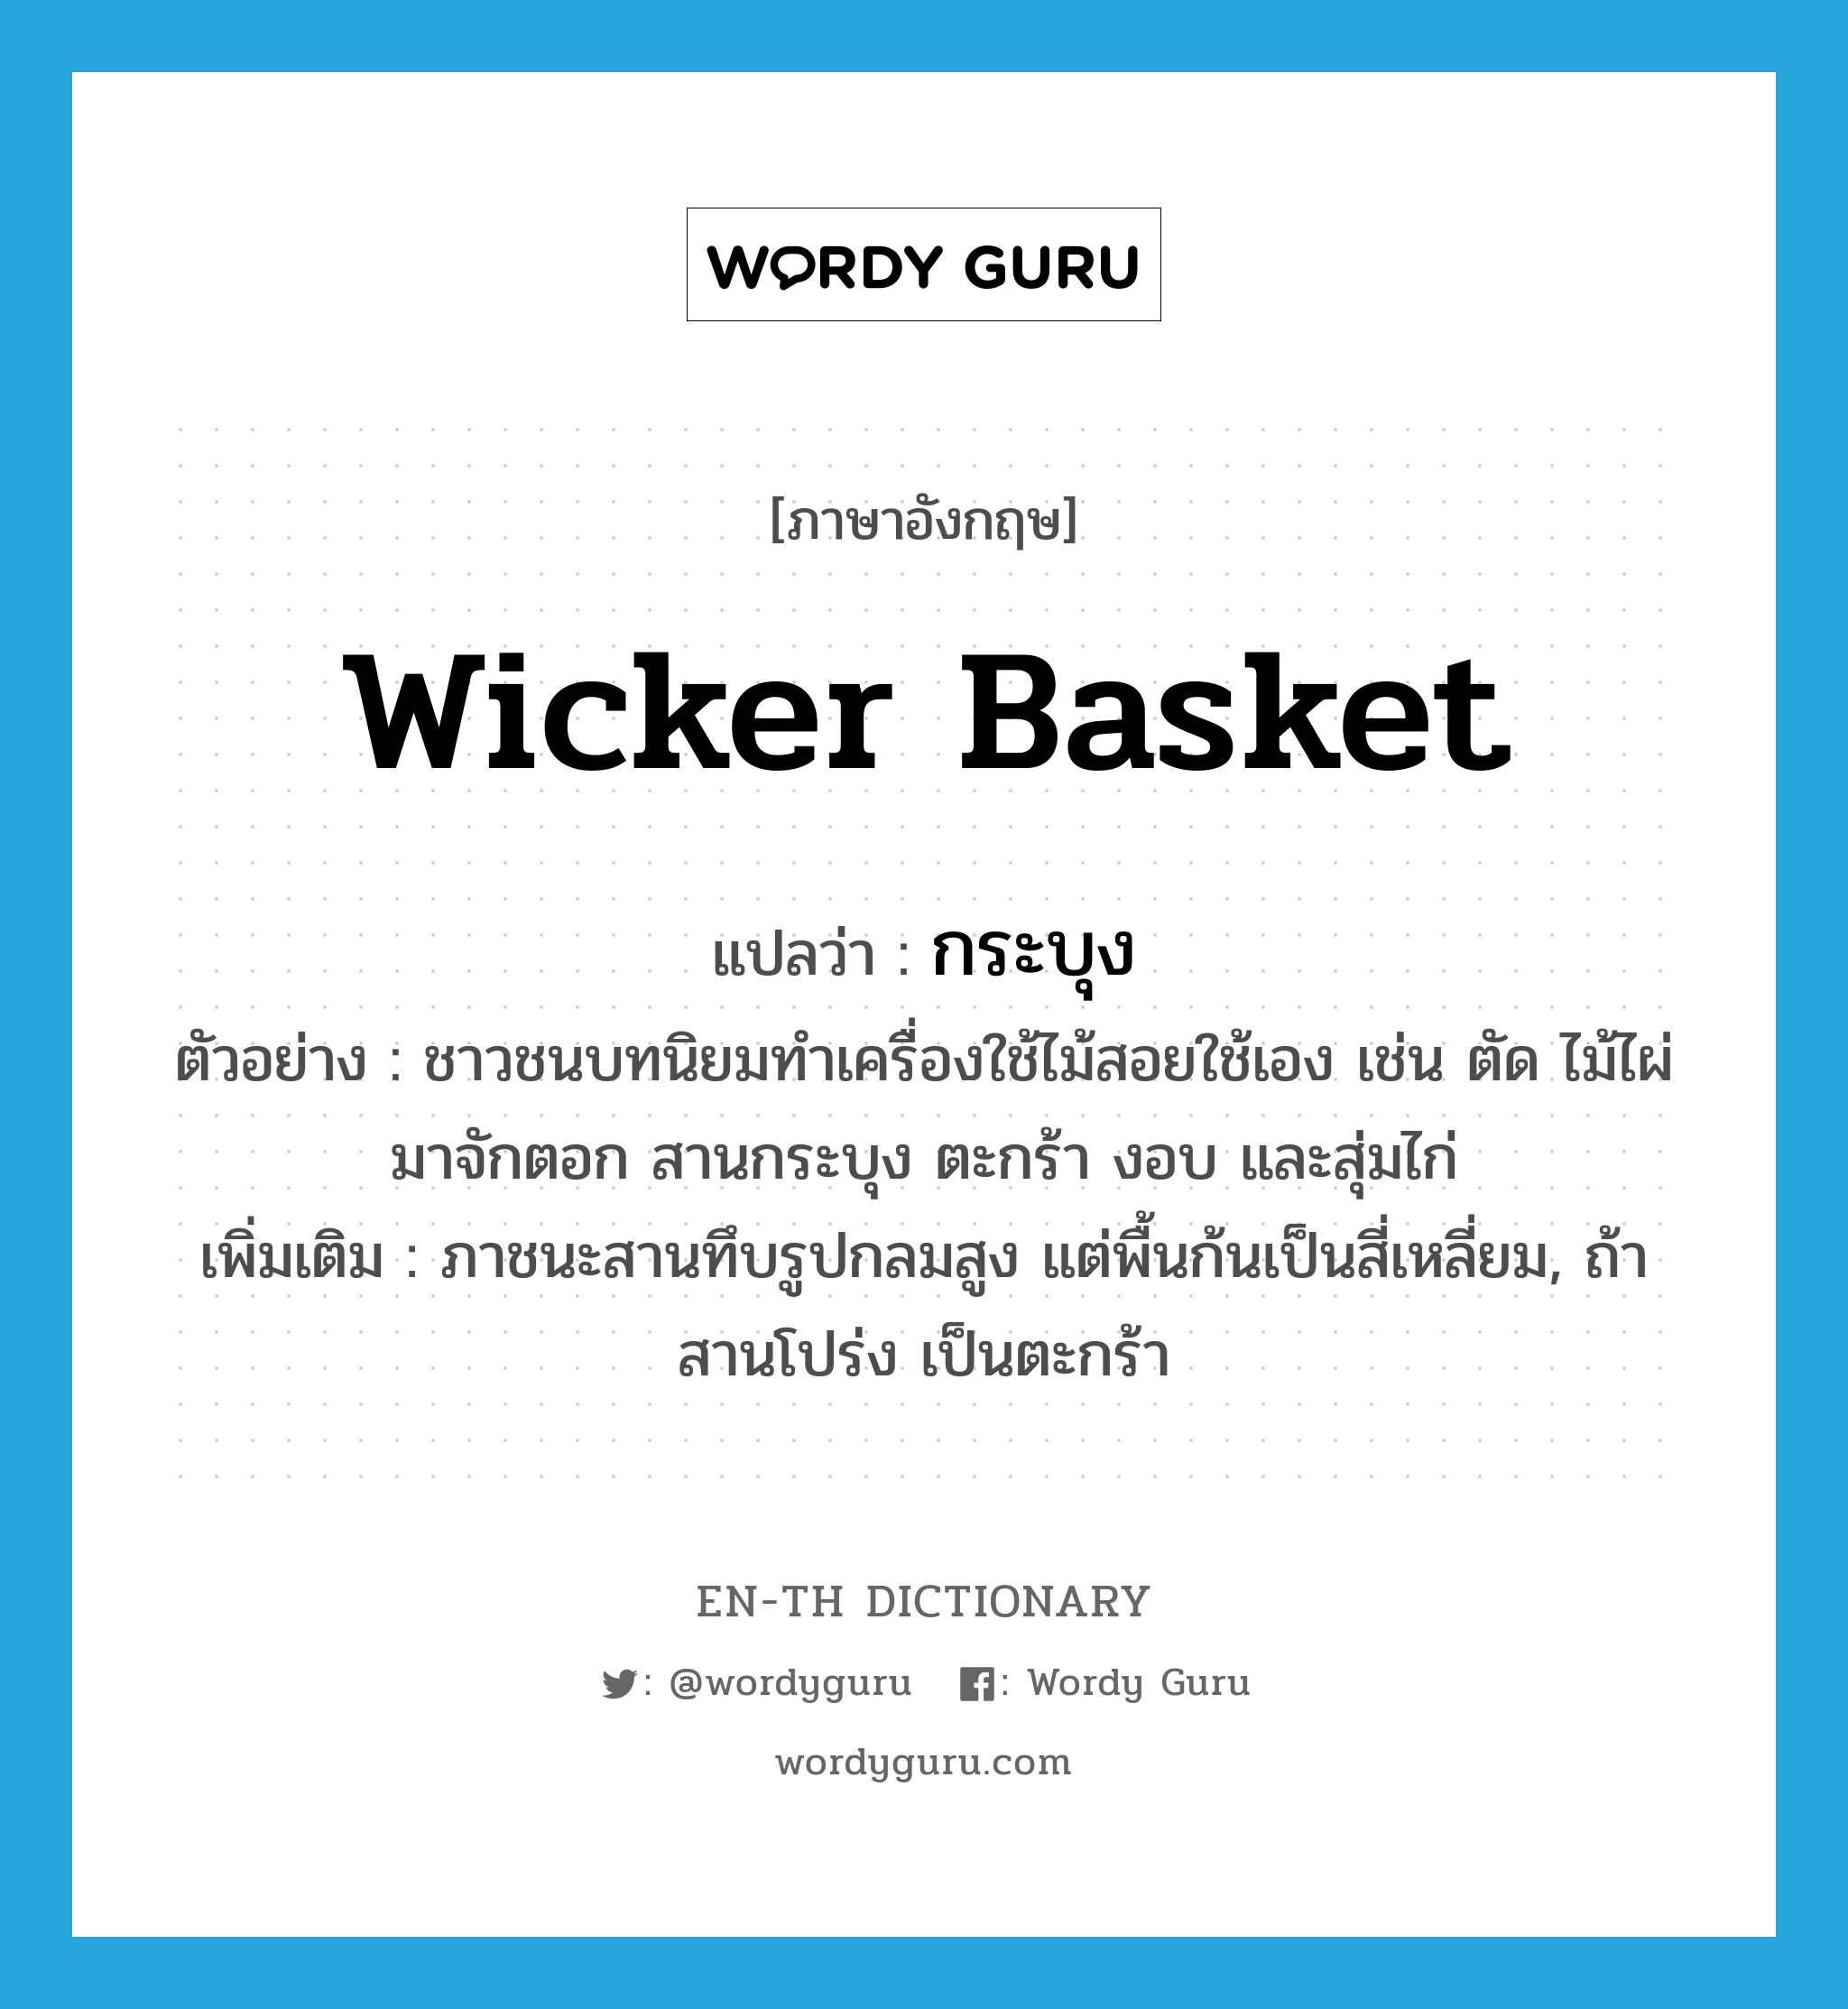 wicker basket แปลว่า?, คำศัพท์ภาษาอังกฤษ wicker basket แปลว่า กระบุง ประเภท N ตัวอย่าง ชาวชนบทนิยมทำเครื่องใช้ไม้สอยใช้เอง เช่น ตัด ไม้ไผ่มาจักตอก สานกระบุง ตะกร้า งอบ และสุ่มไก่ เพิ่มเติม ภาชนะสานทึบรูปกลมสูง แต่พื้นก้นเป็นสี่เหลี่ยม, ถ้าสานโปร่ง เป็นตะกร้า หมวด N